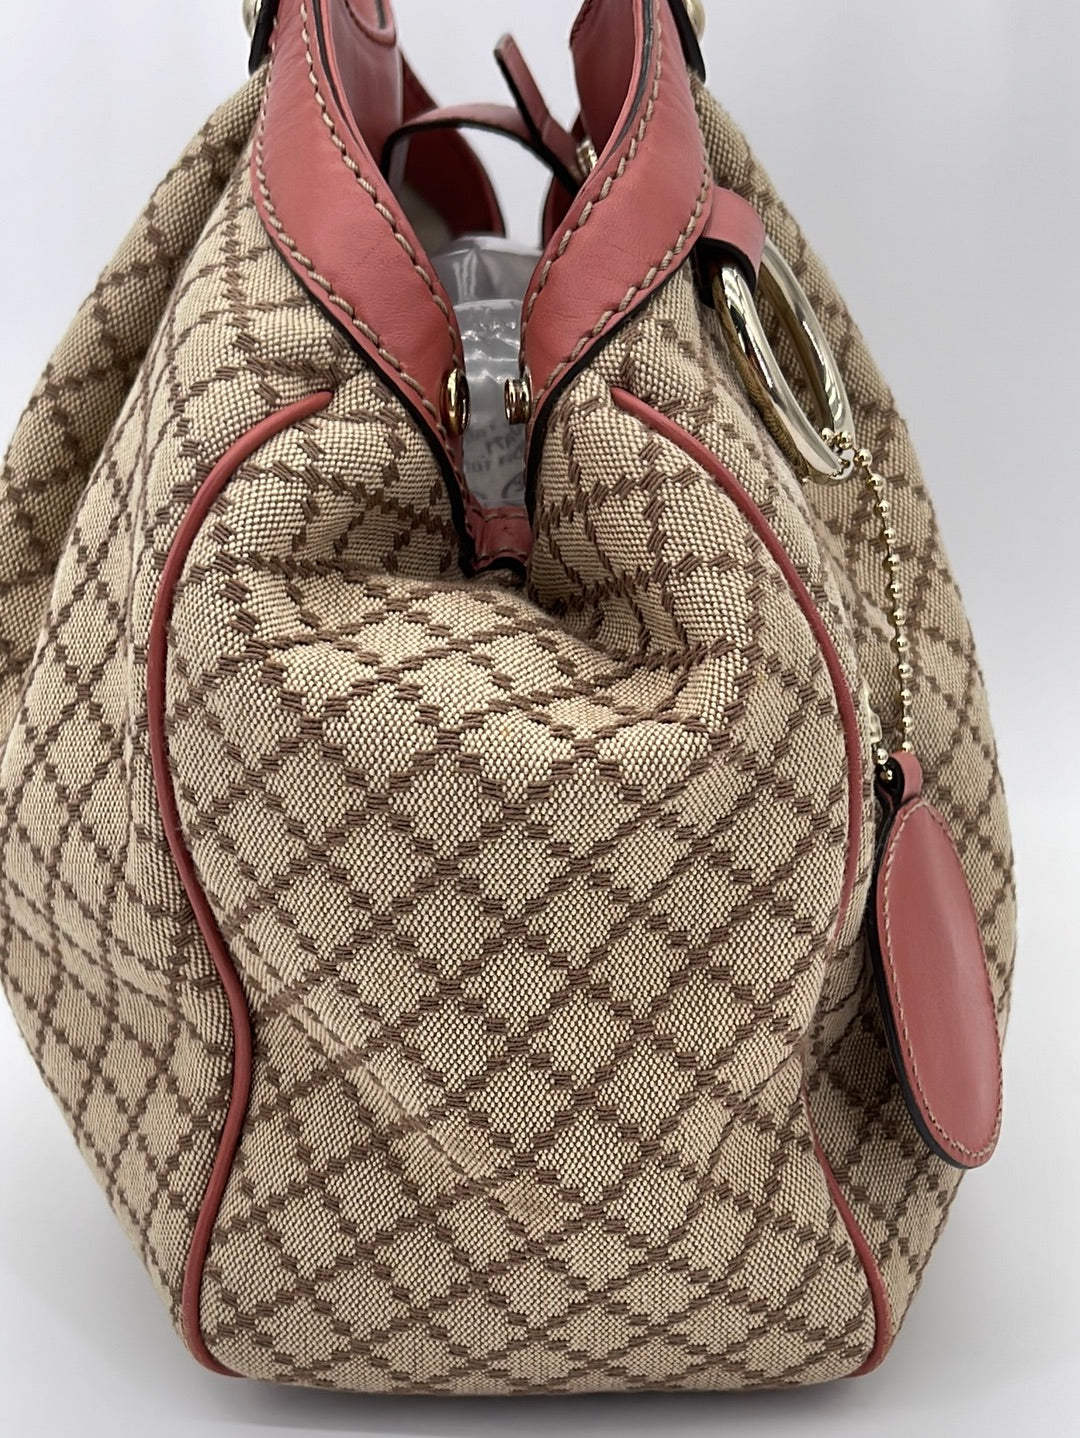 Preloved Gucci Large Beige Canvas Sukey Shoulder Bag with Coral Leather Trim 211944486628 060523